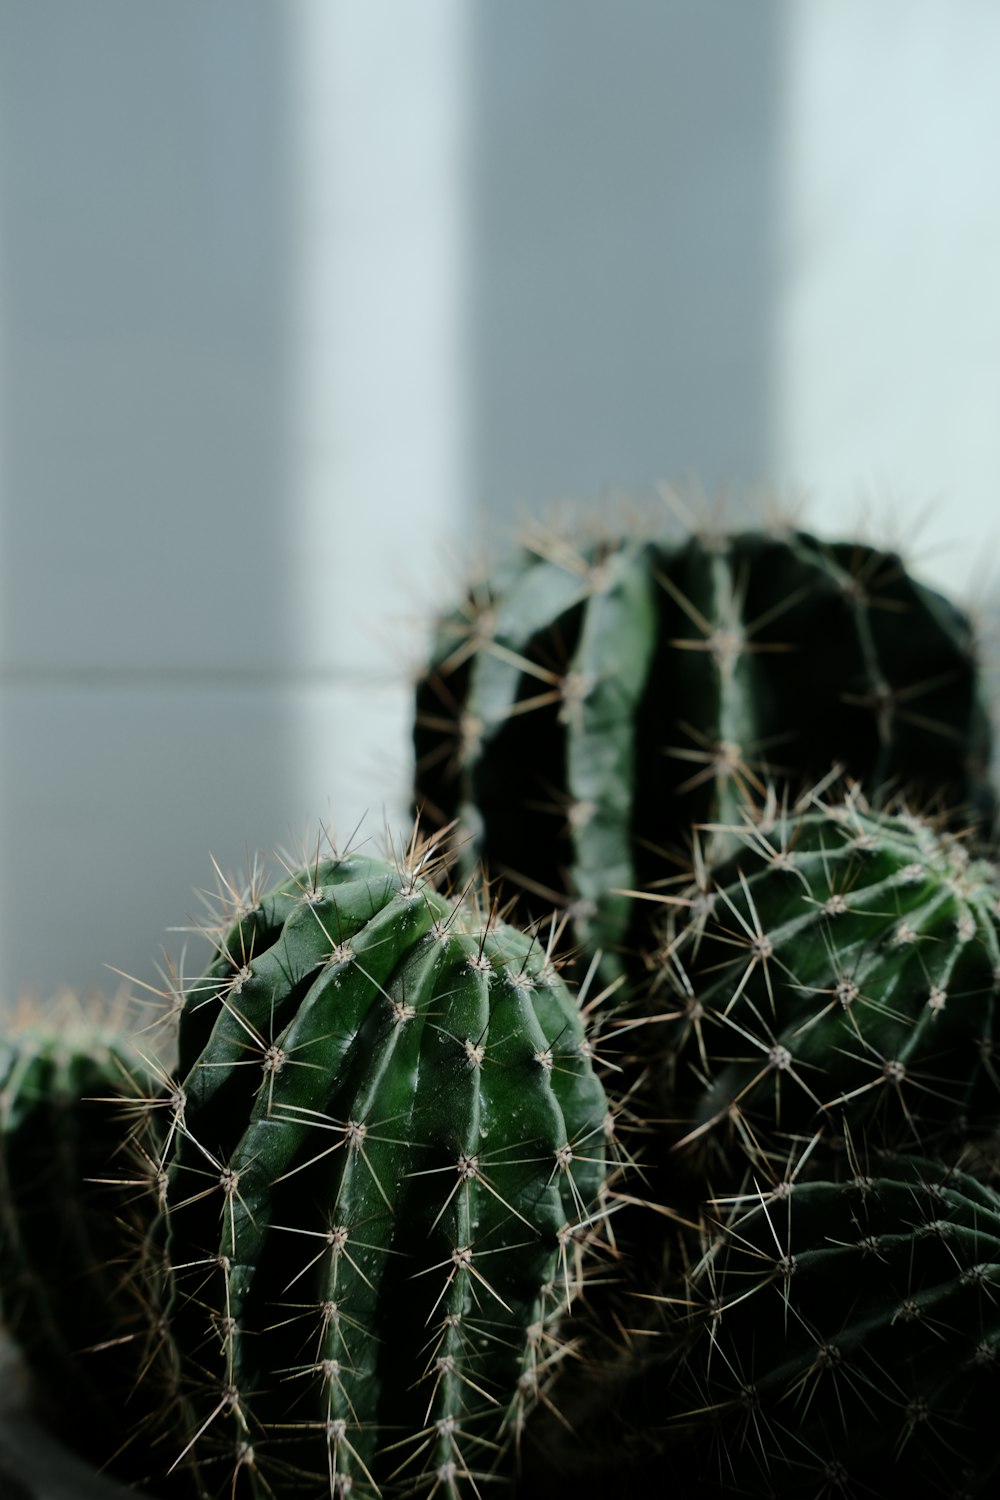 a close up of a cactus in a pot